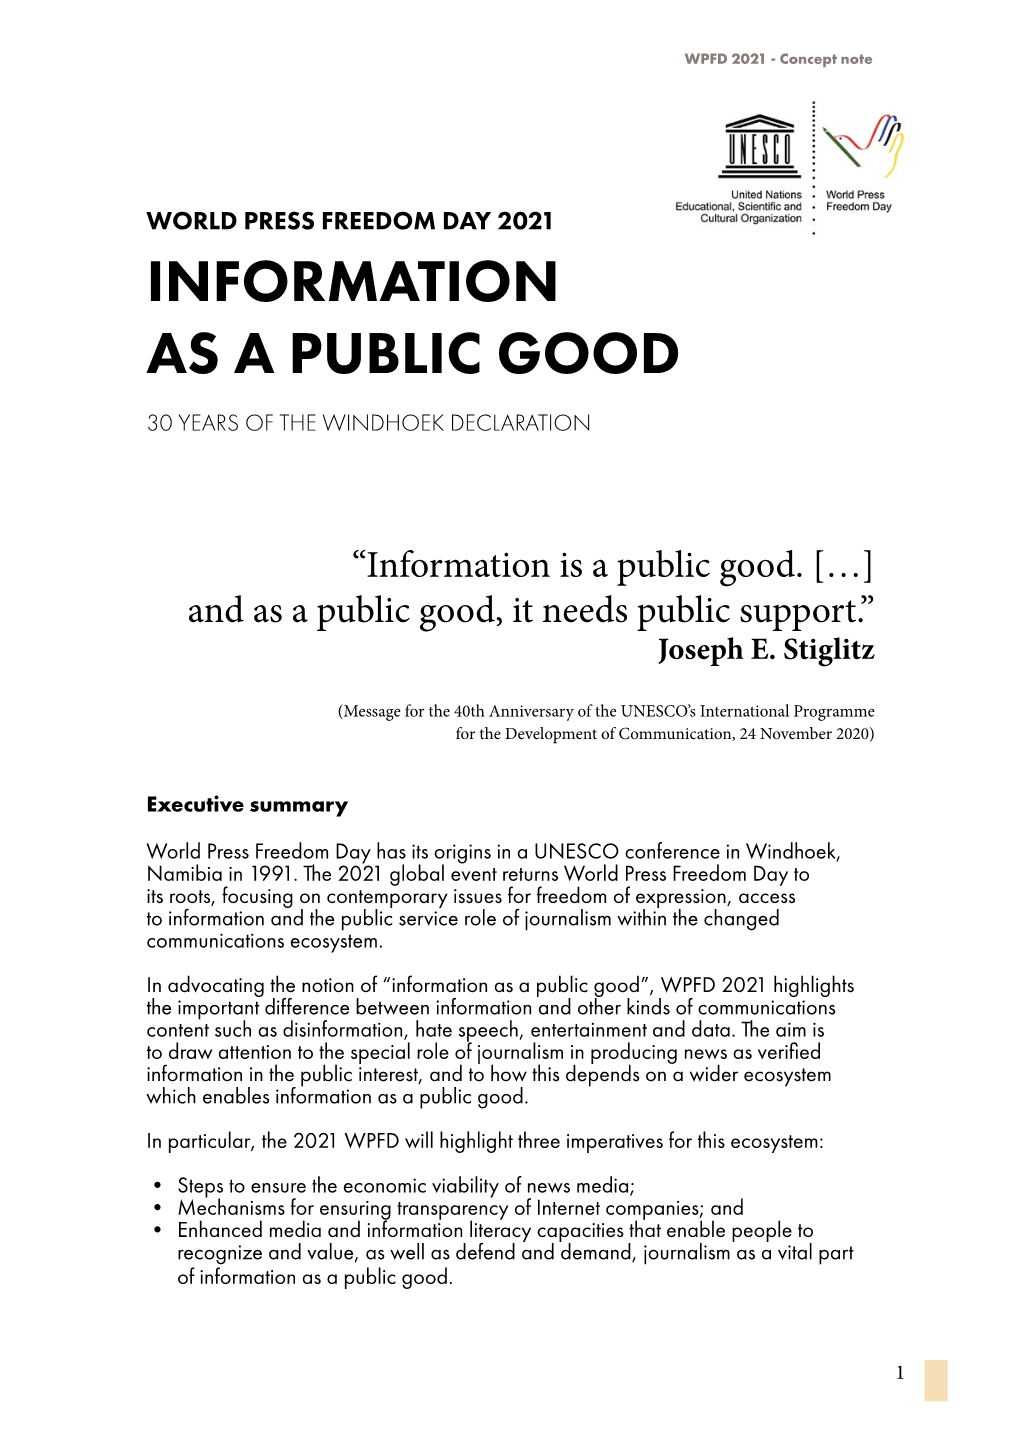 Information As a Public Good